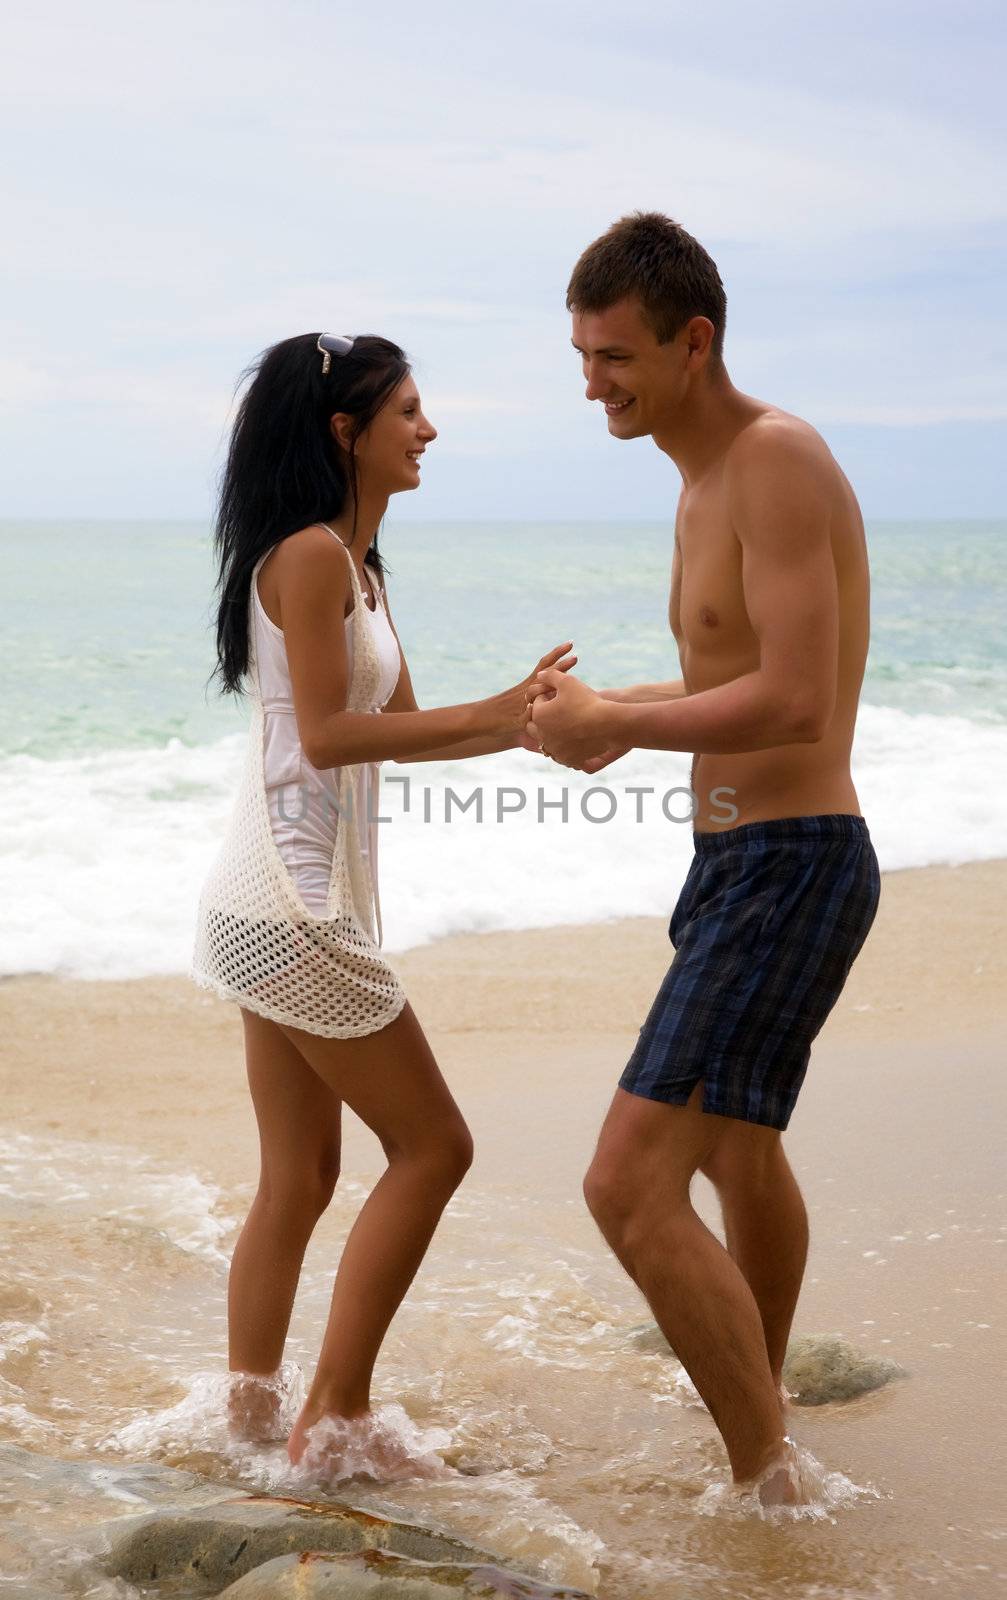 A man and woman enjoy life at the beach by AleksandrN